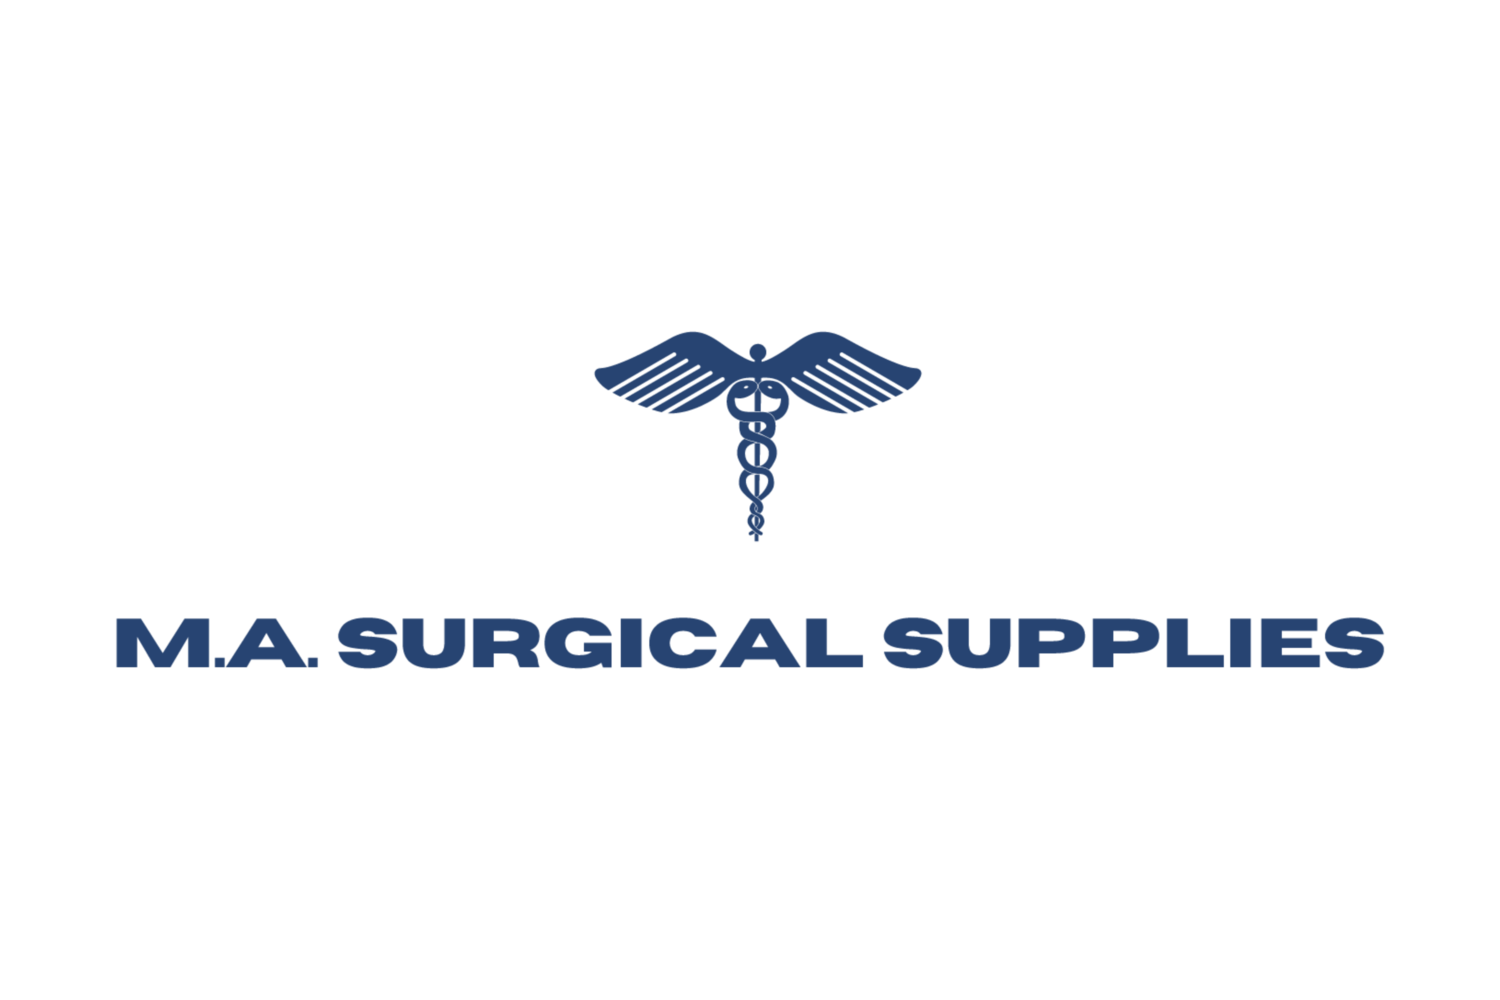 M.A. Surgical Supplies